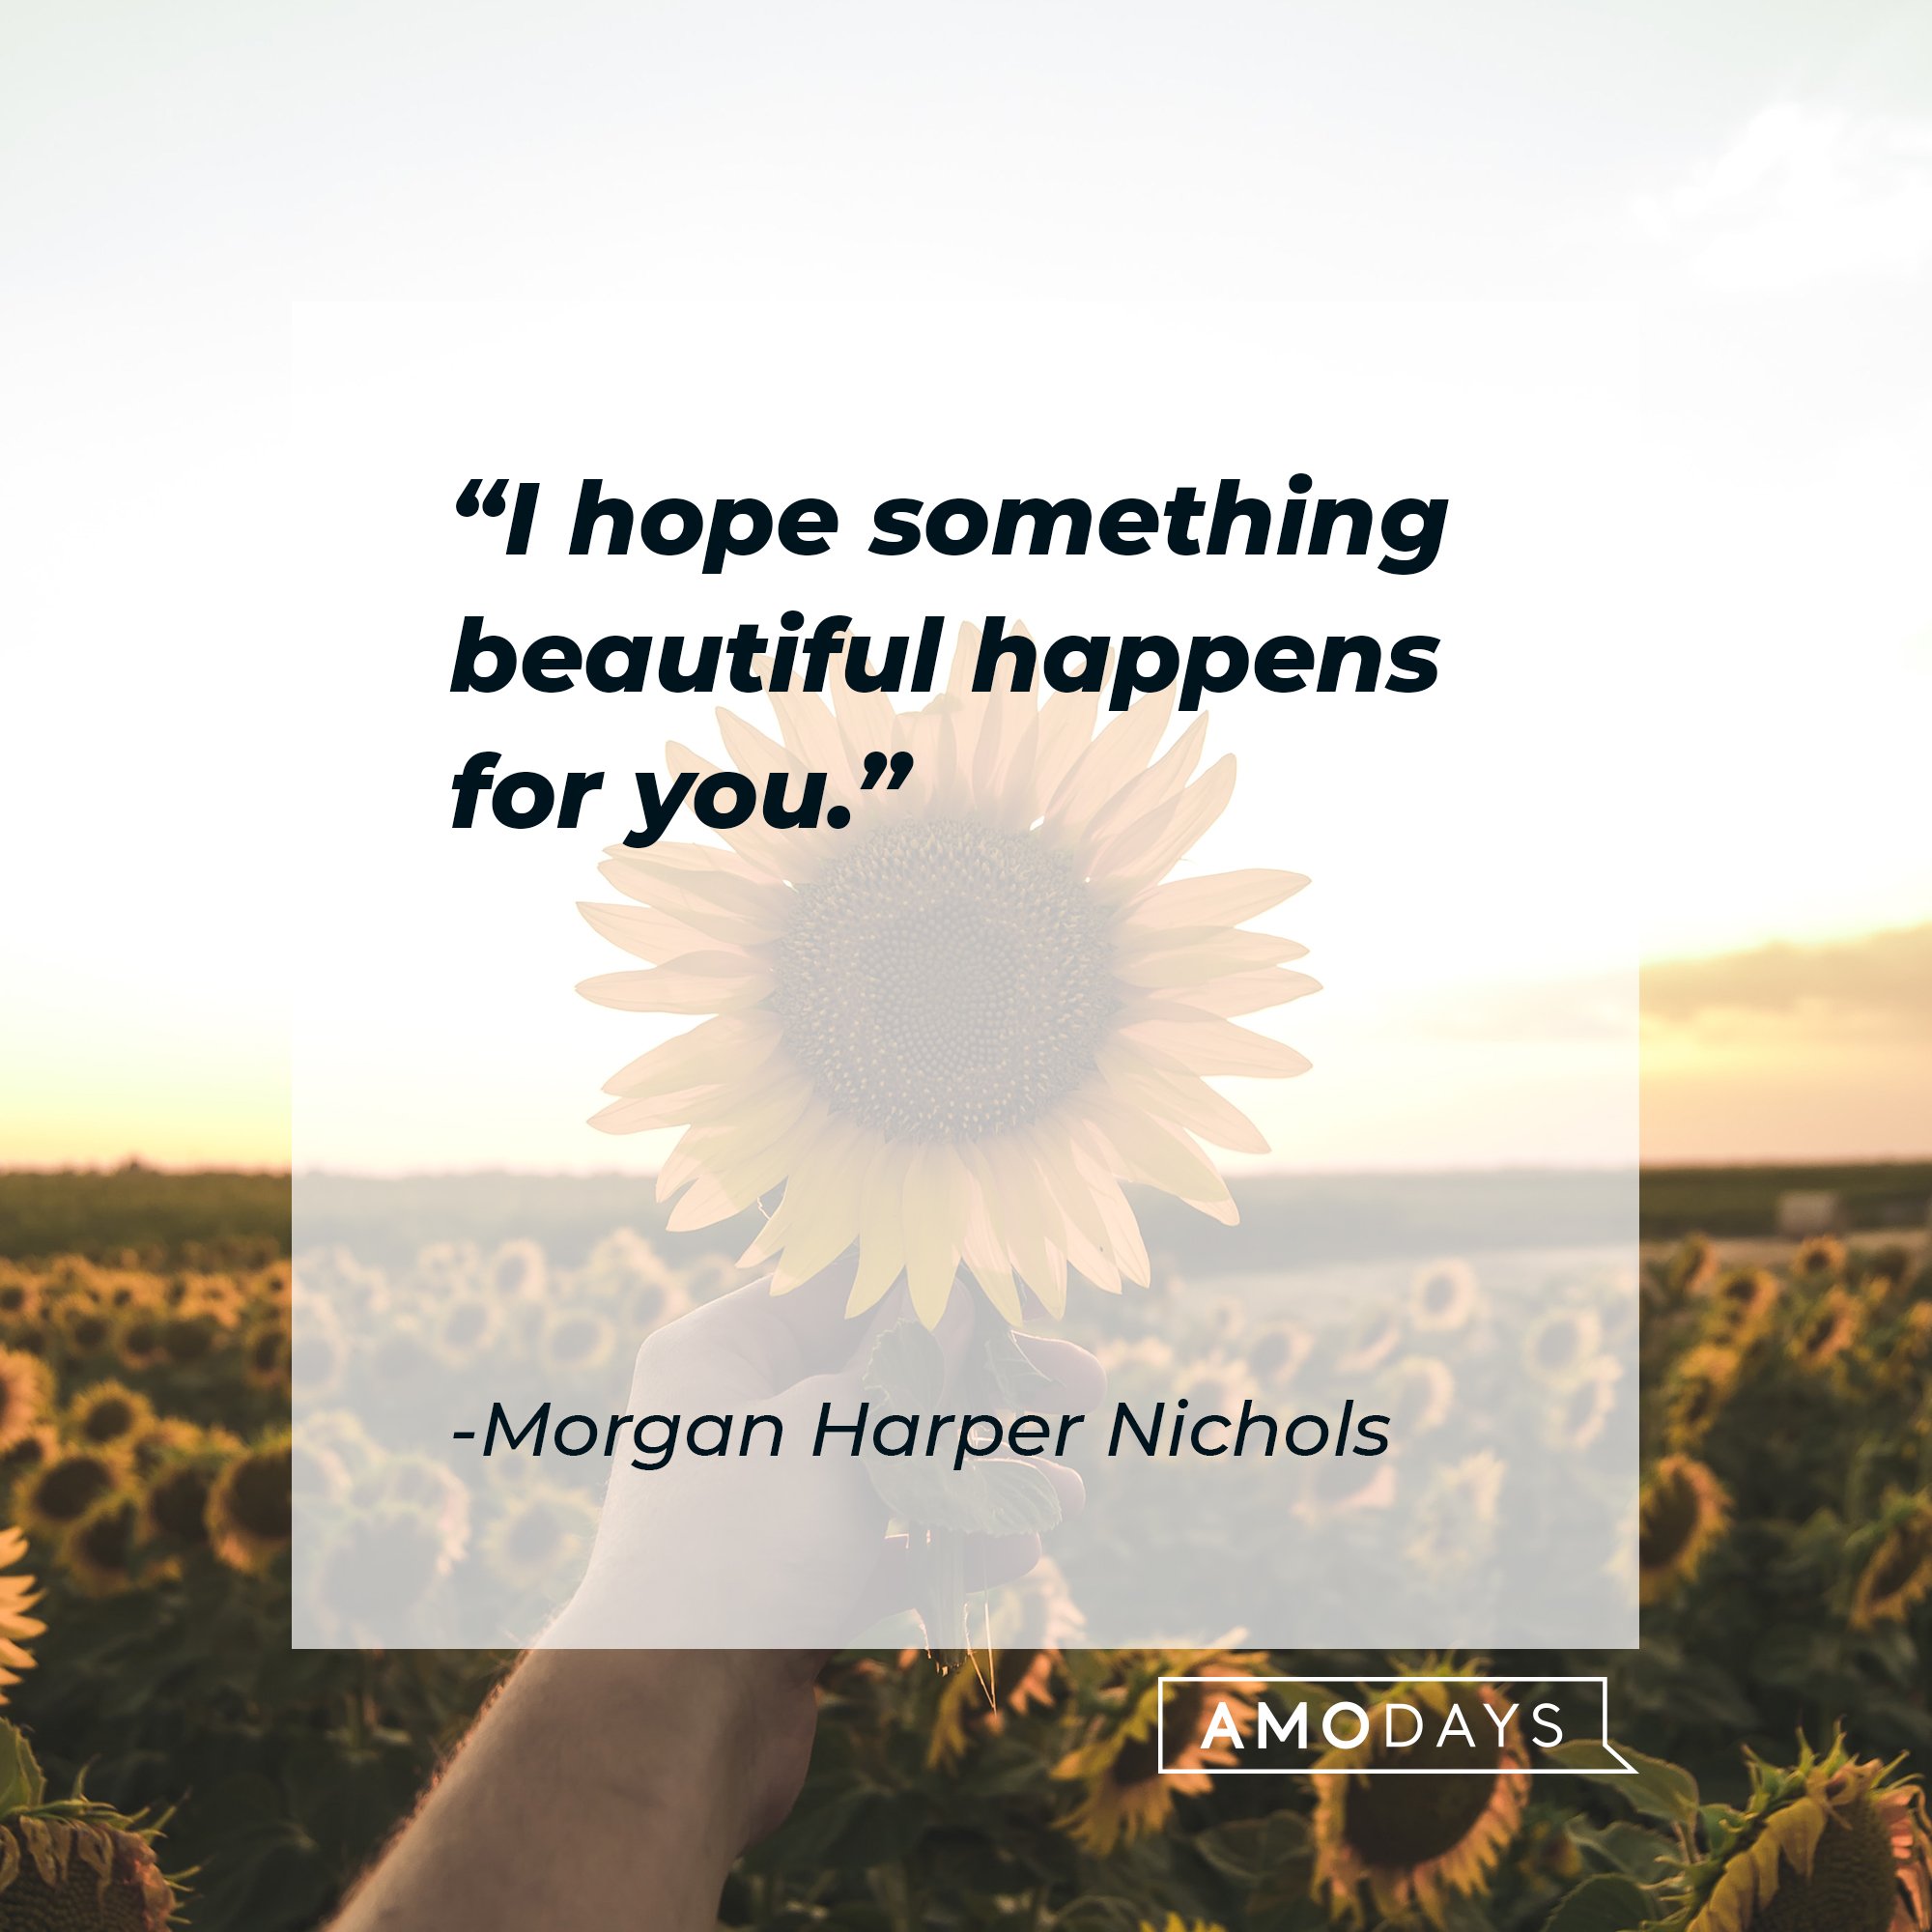 Morgan Harper Nichols’ quote: "I hope something beautiful happens for you."  | Image: AmoDays